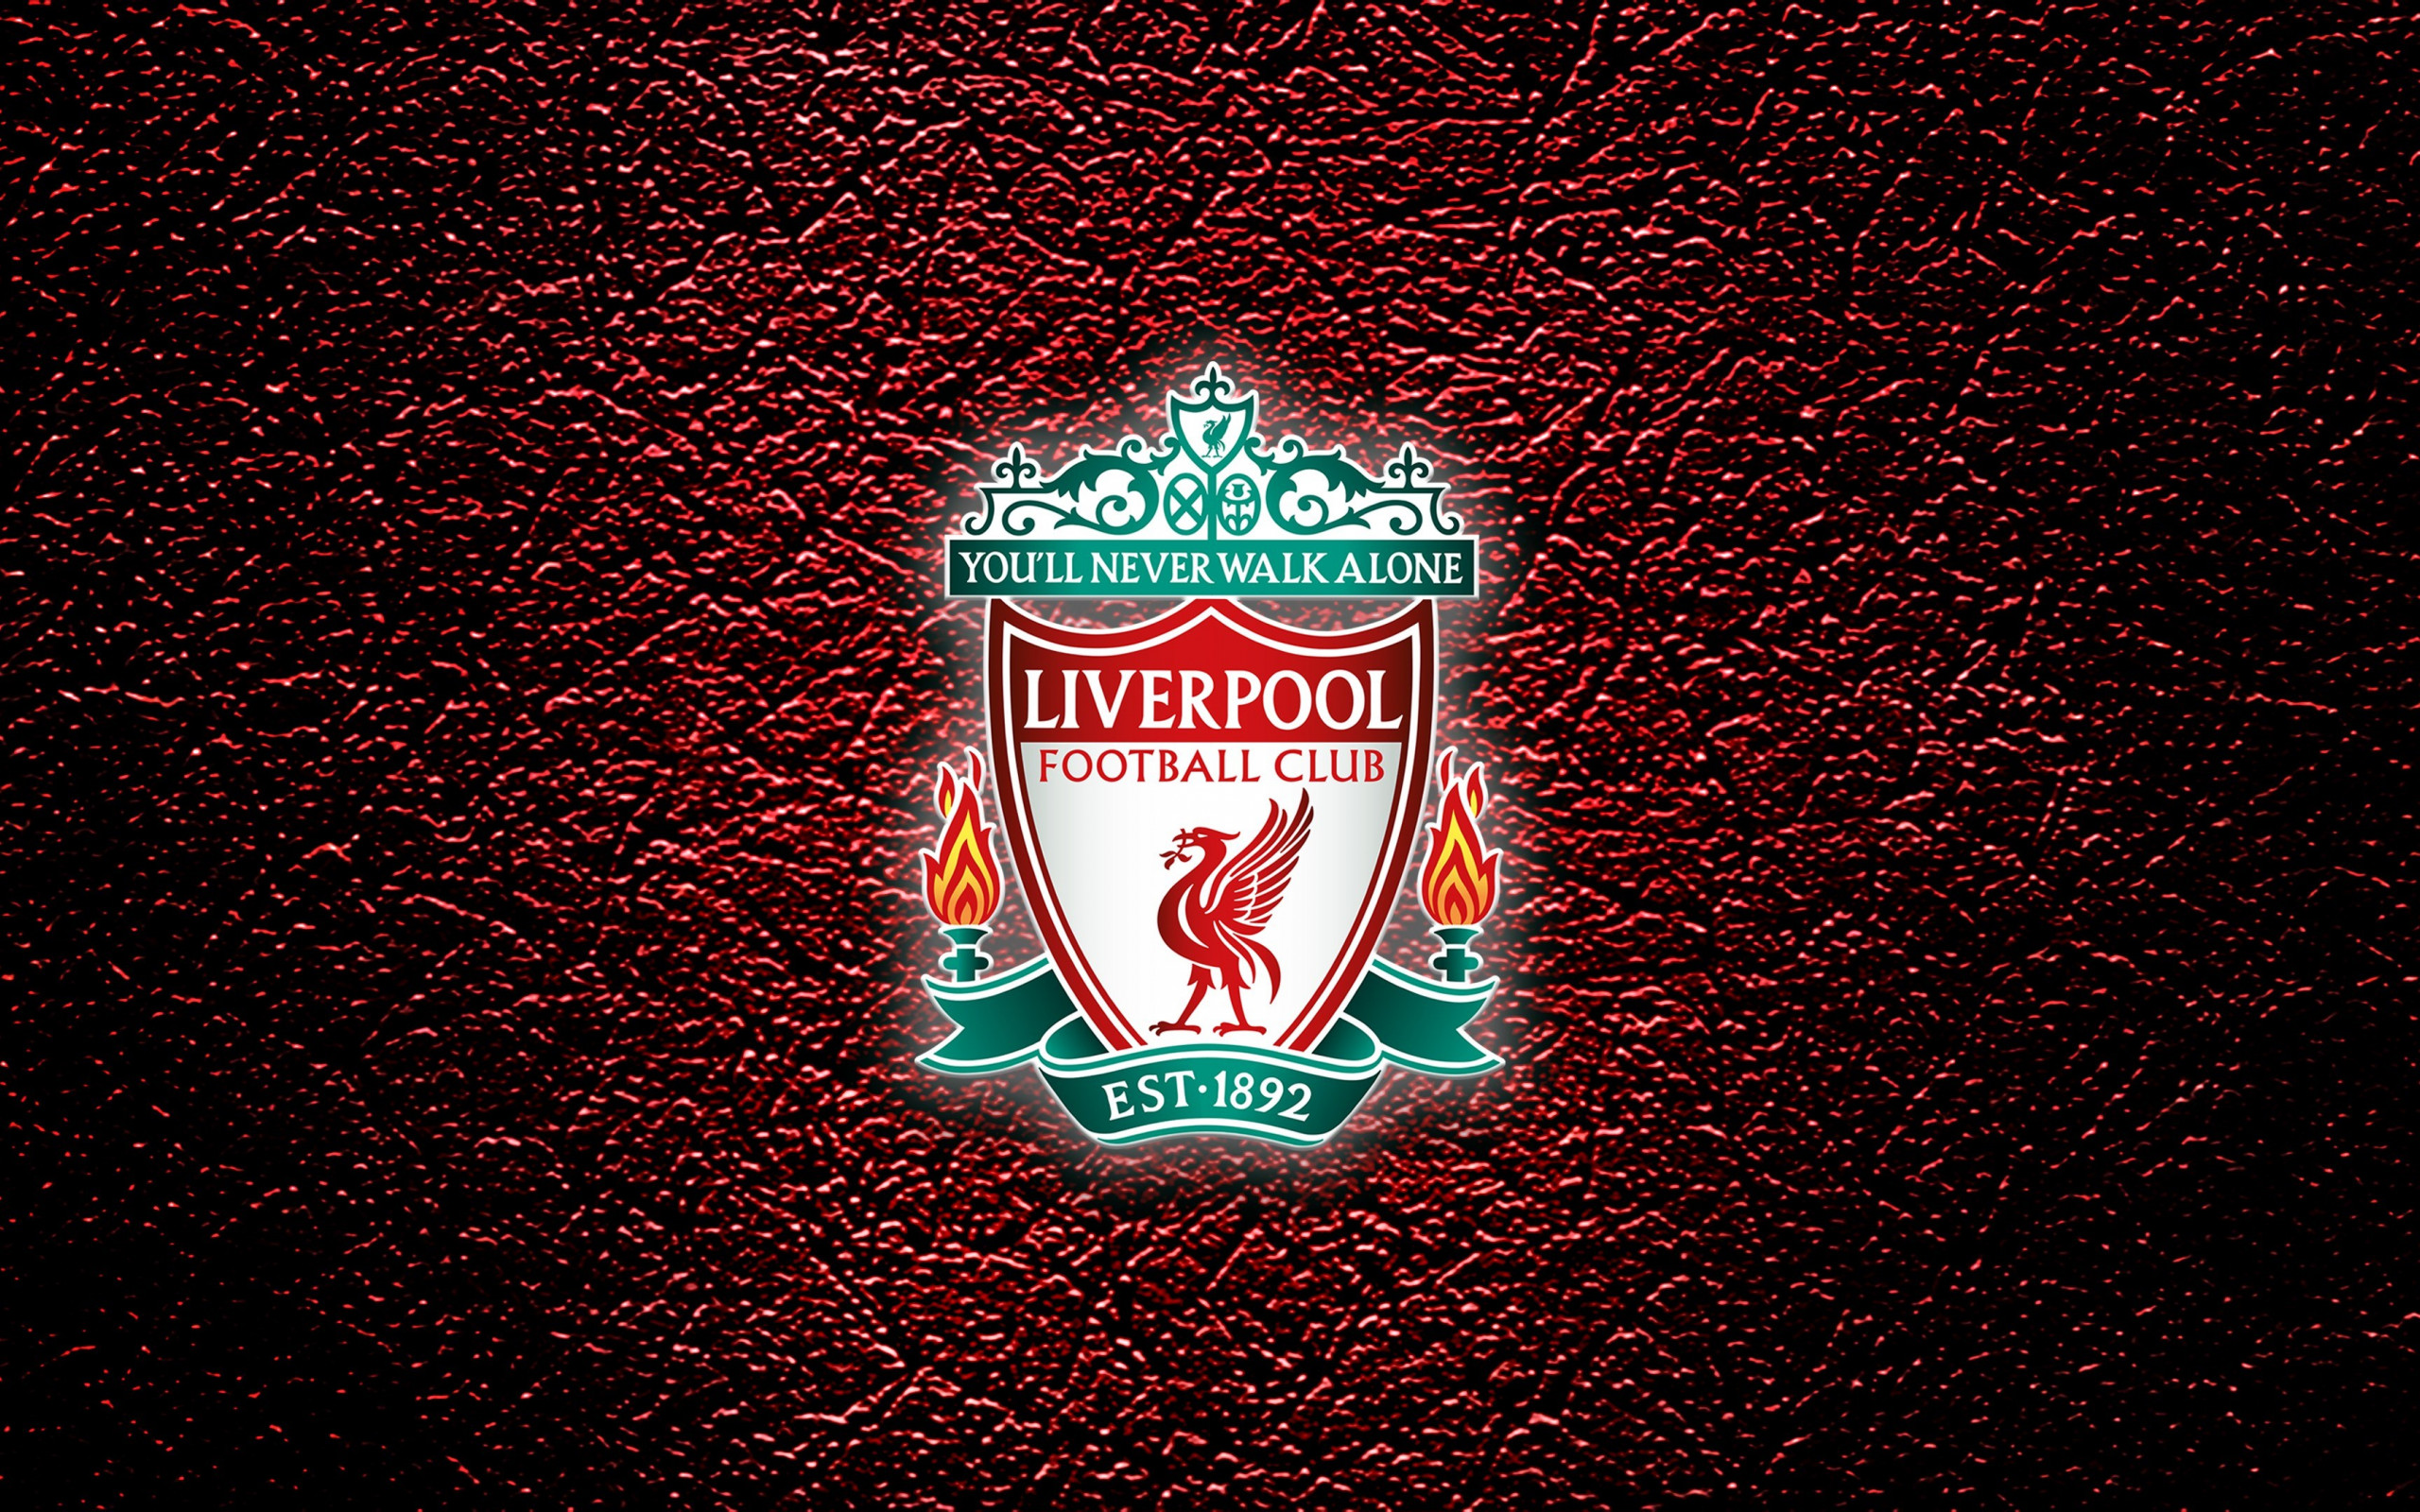 Liverpool - You'll never walk alone wallpaper 2560x1600